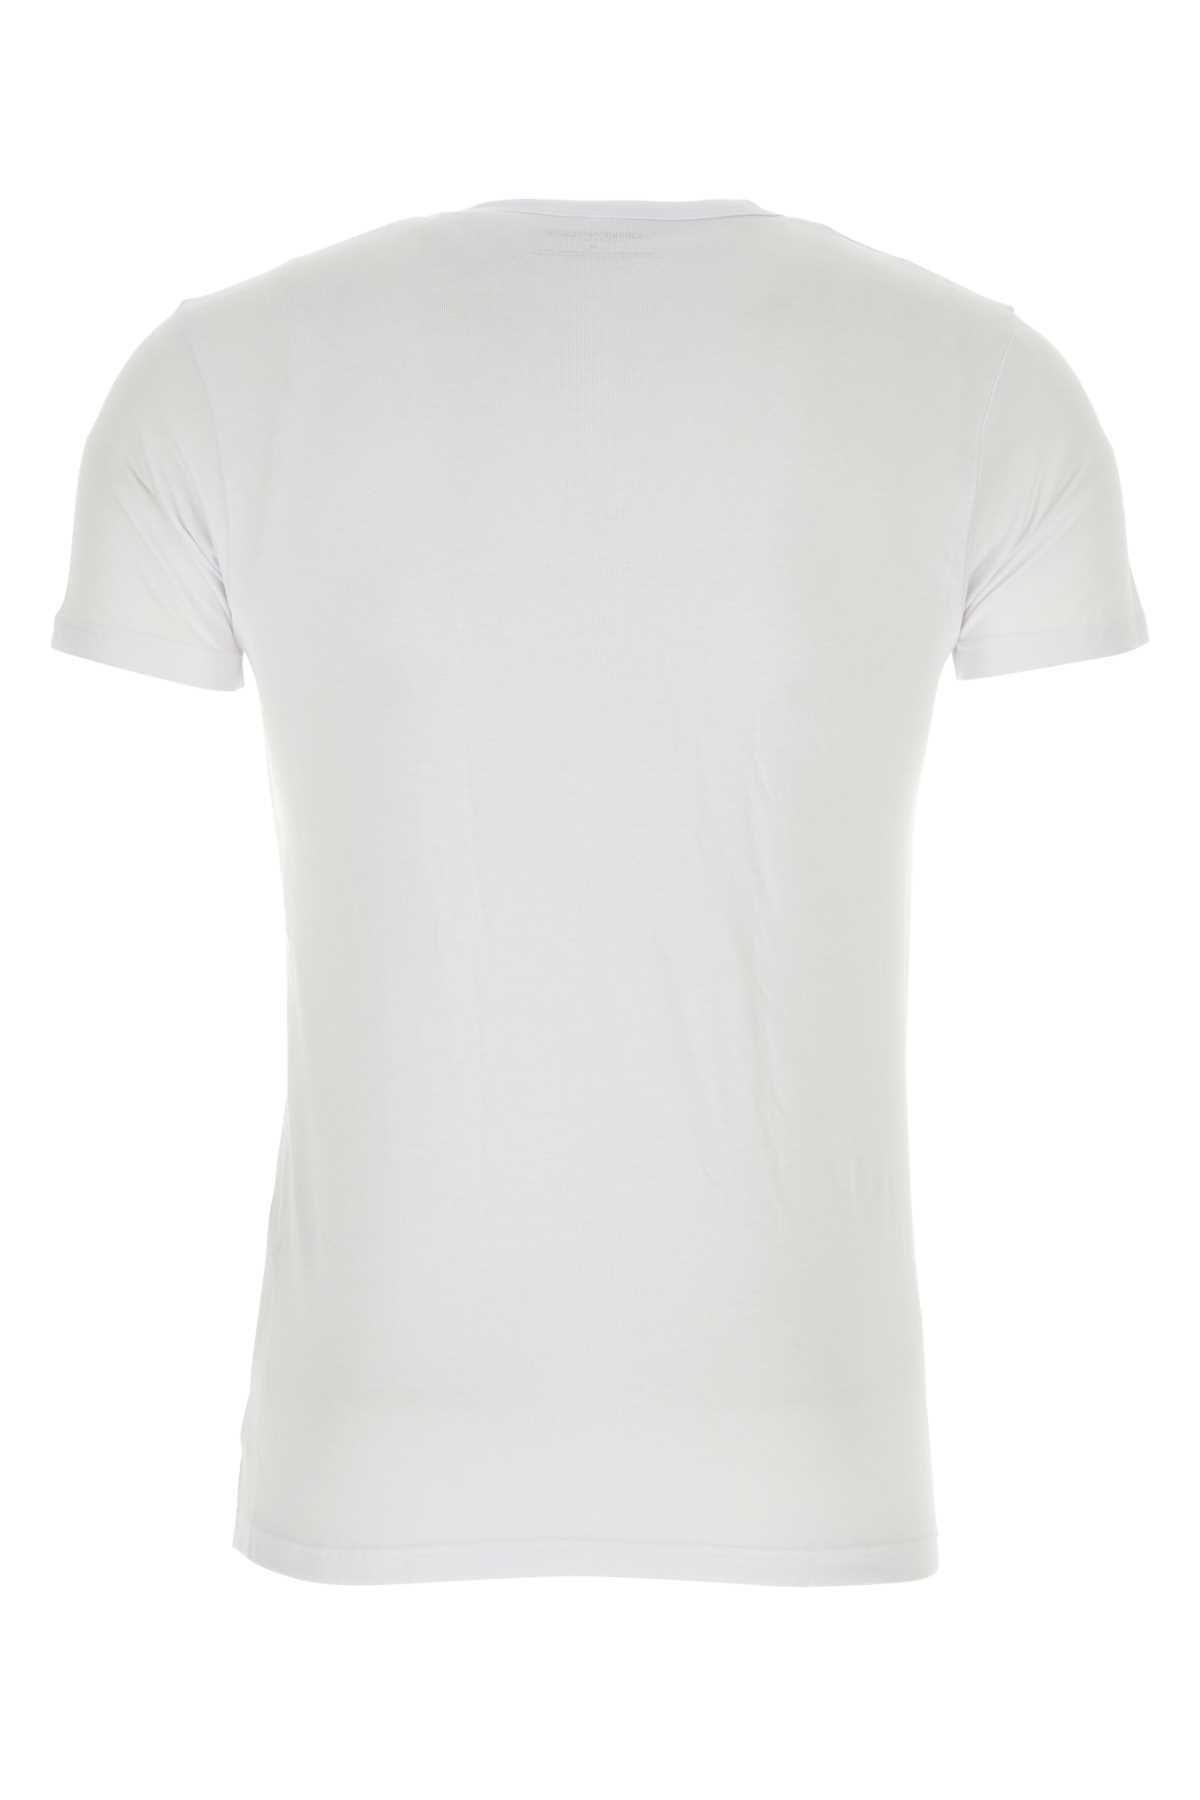 Emporio Armani White Stretch Cotton Underwear T-shirt In 04710